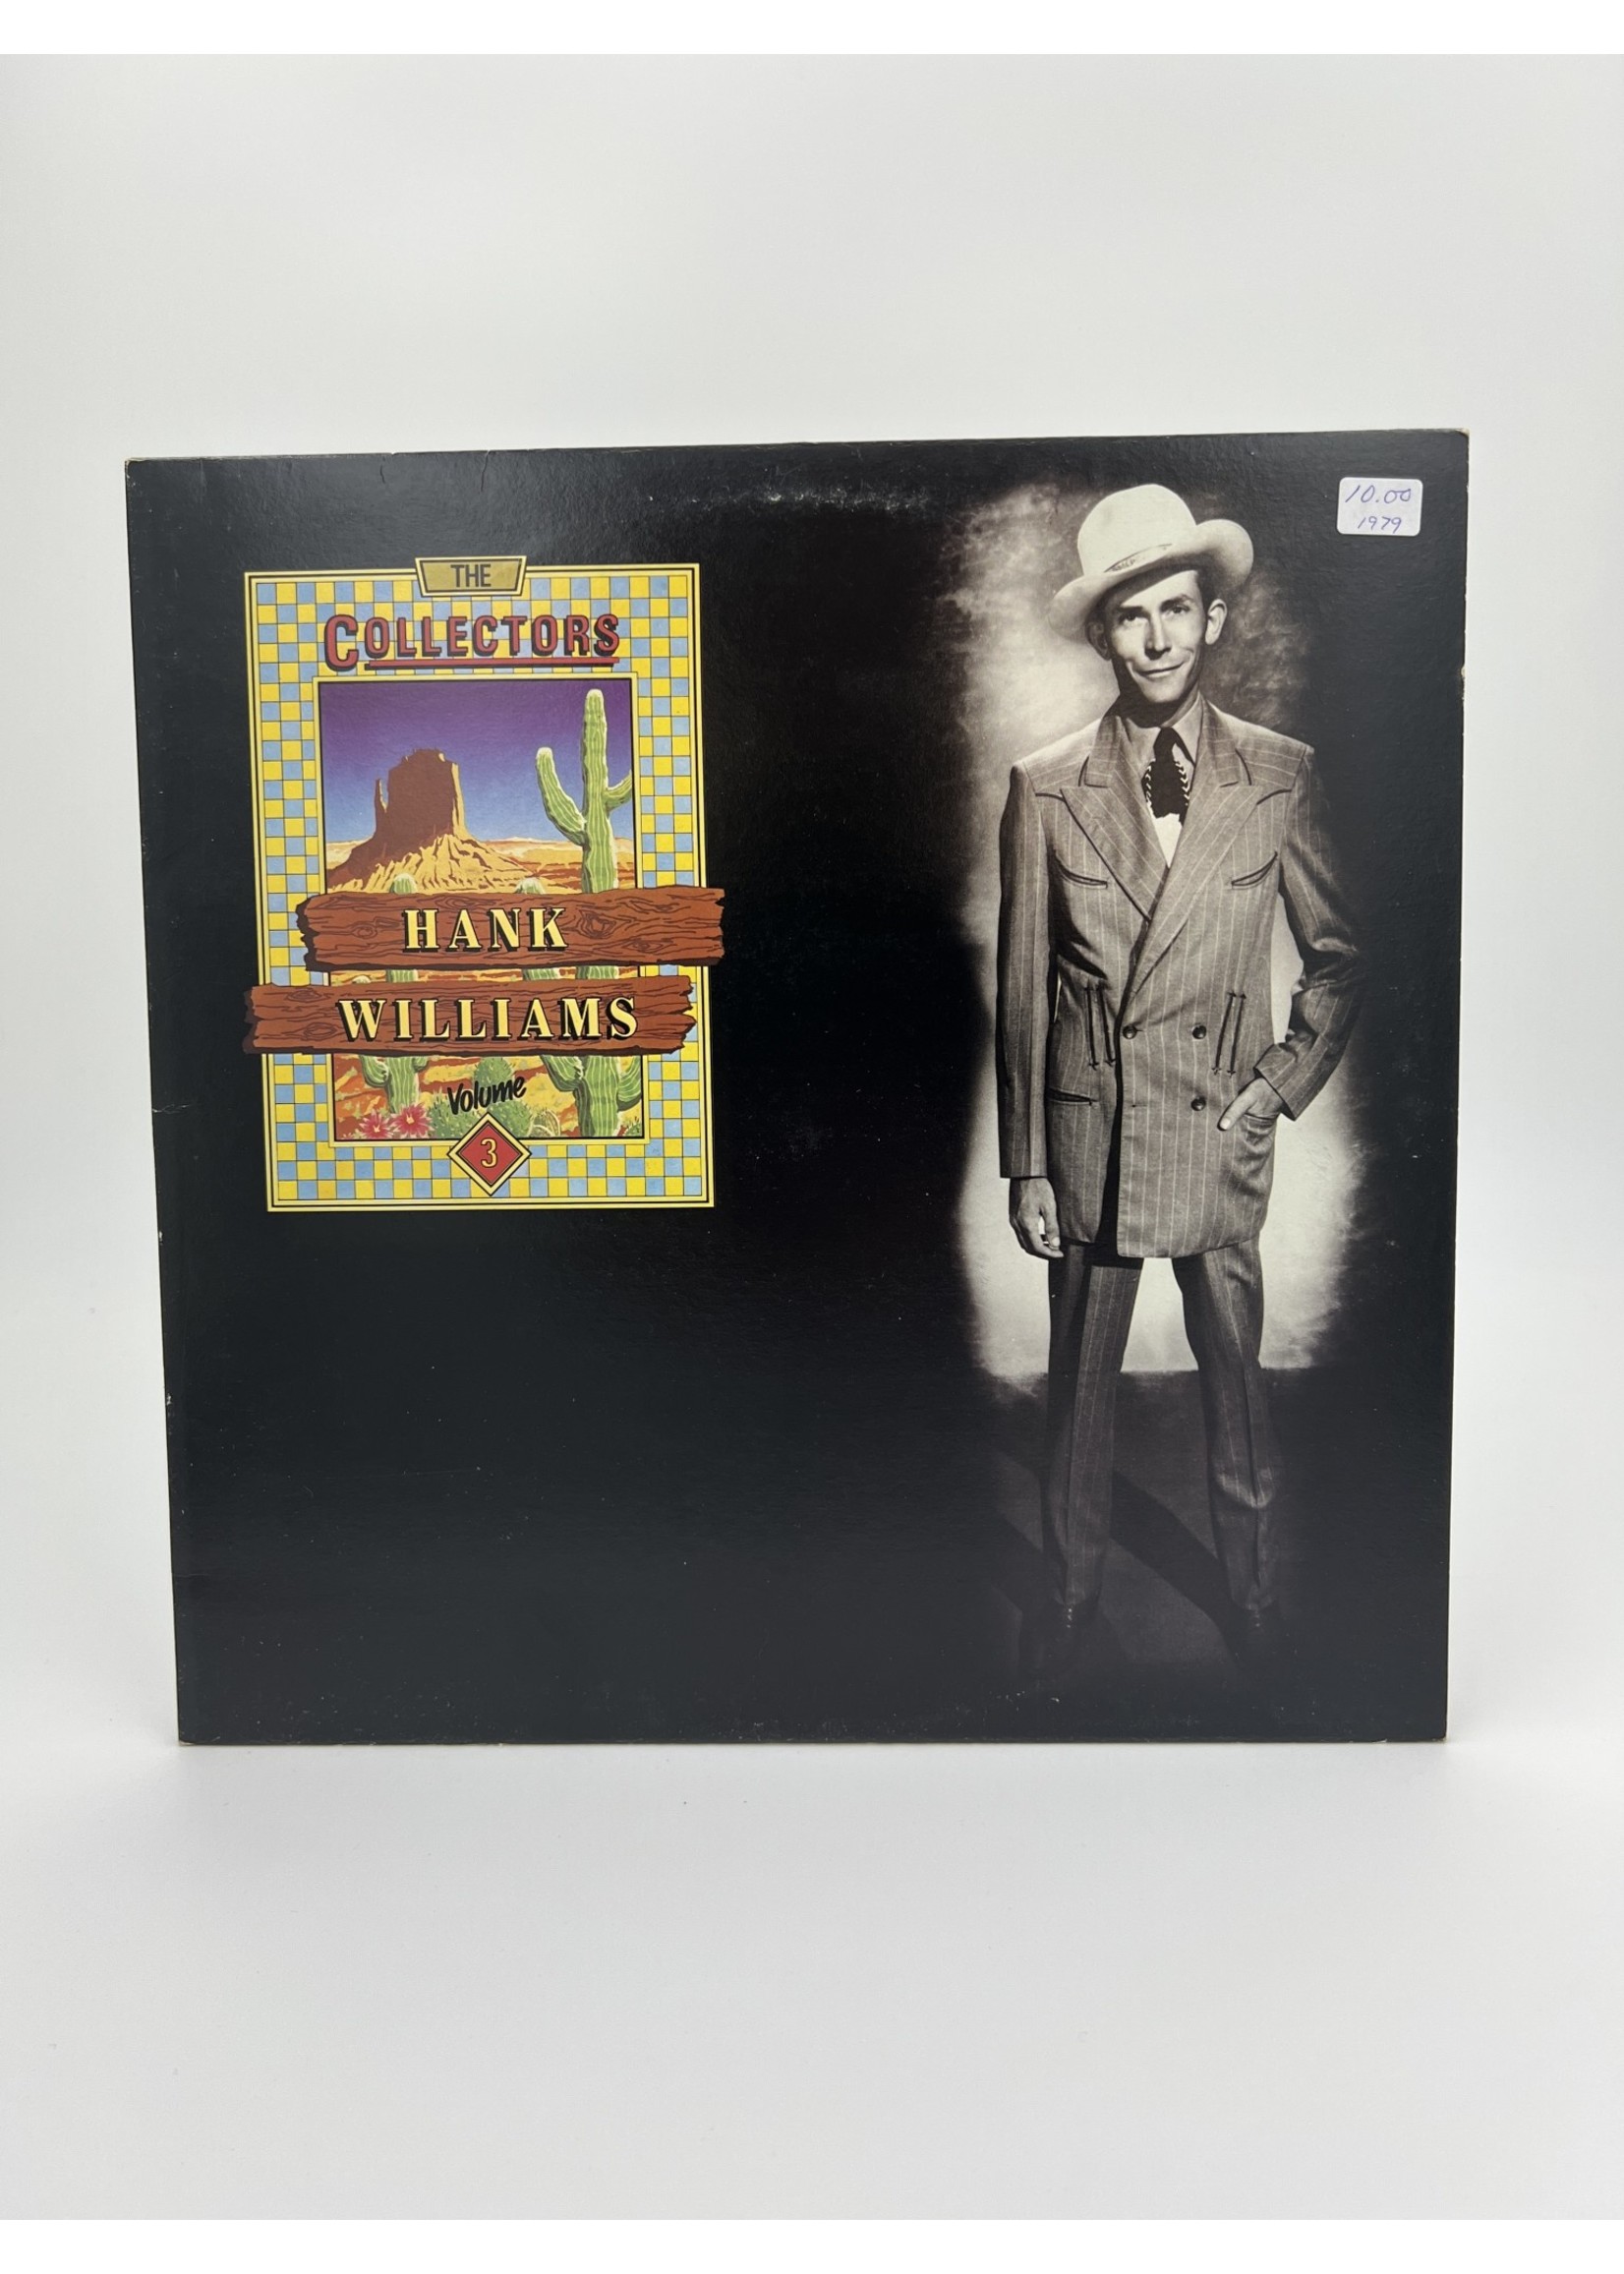 LP Hank Williams Volume 3 The Collectors LP RECORD